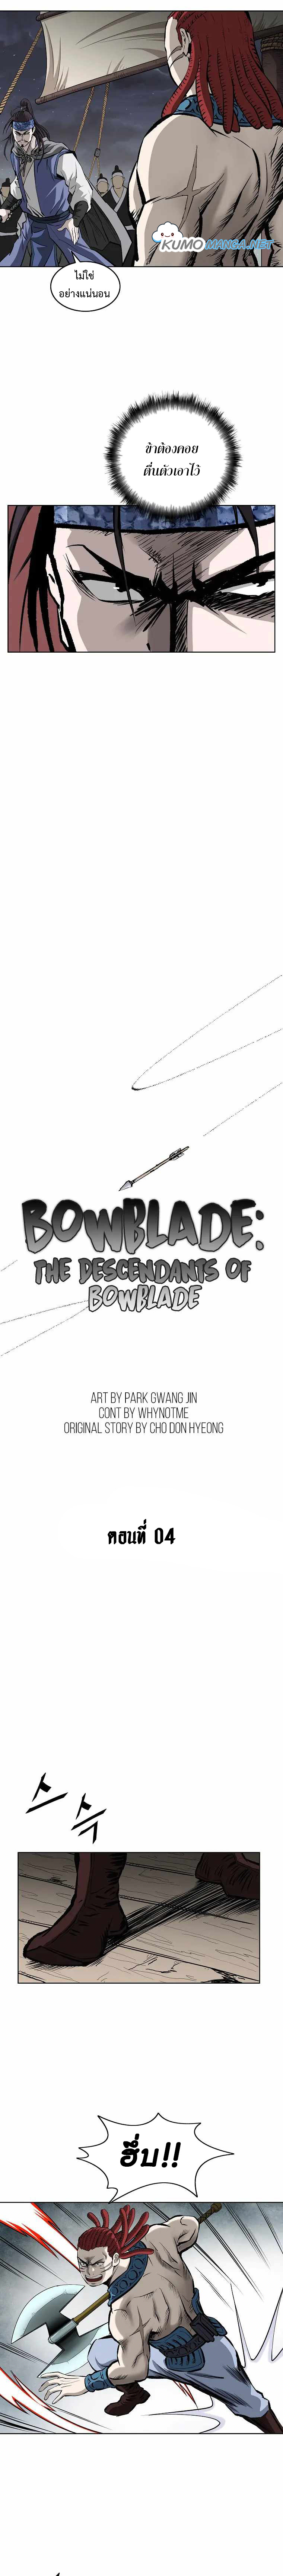 Bowblade (The Descendants of Bowblade) 4 (3)